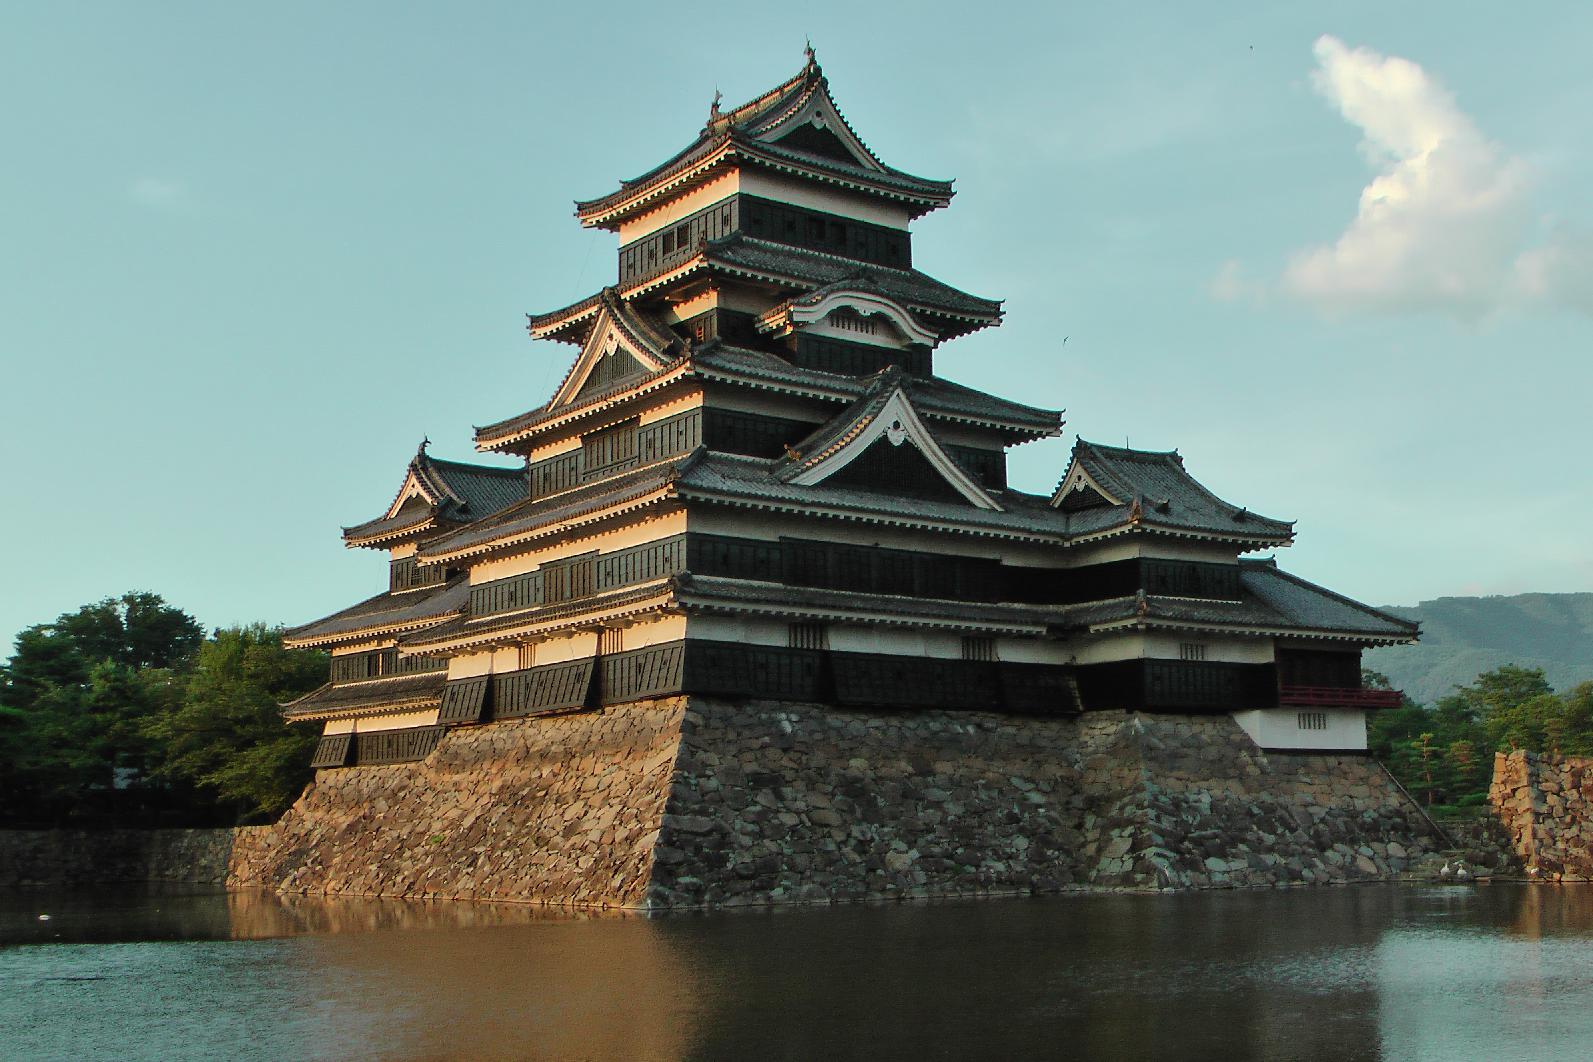 Castle of Matsumoto